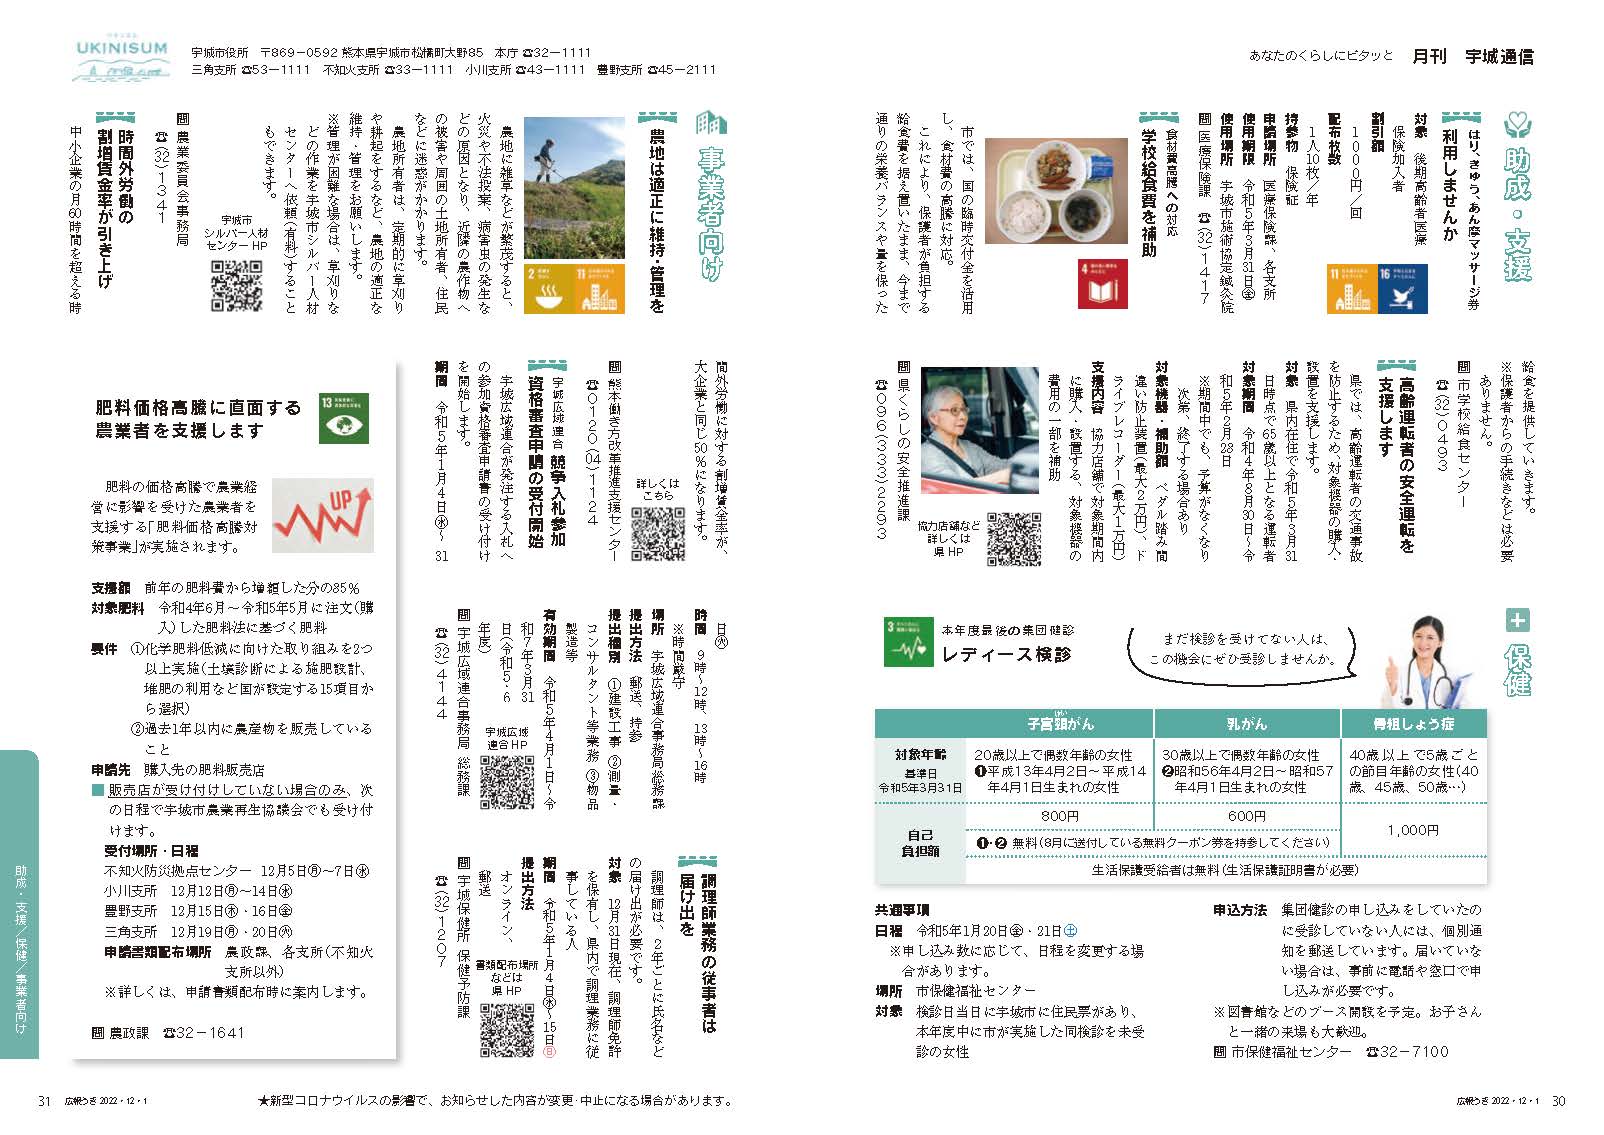 P30、P31　あなたのくらしにピタッと　月刊 宇城通信 　詳細はPDFファイルを参照下さい。